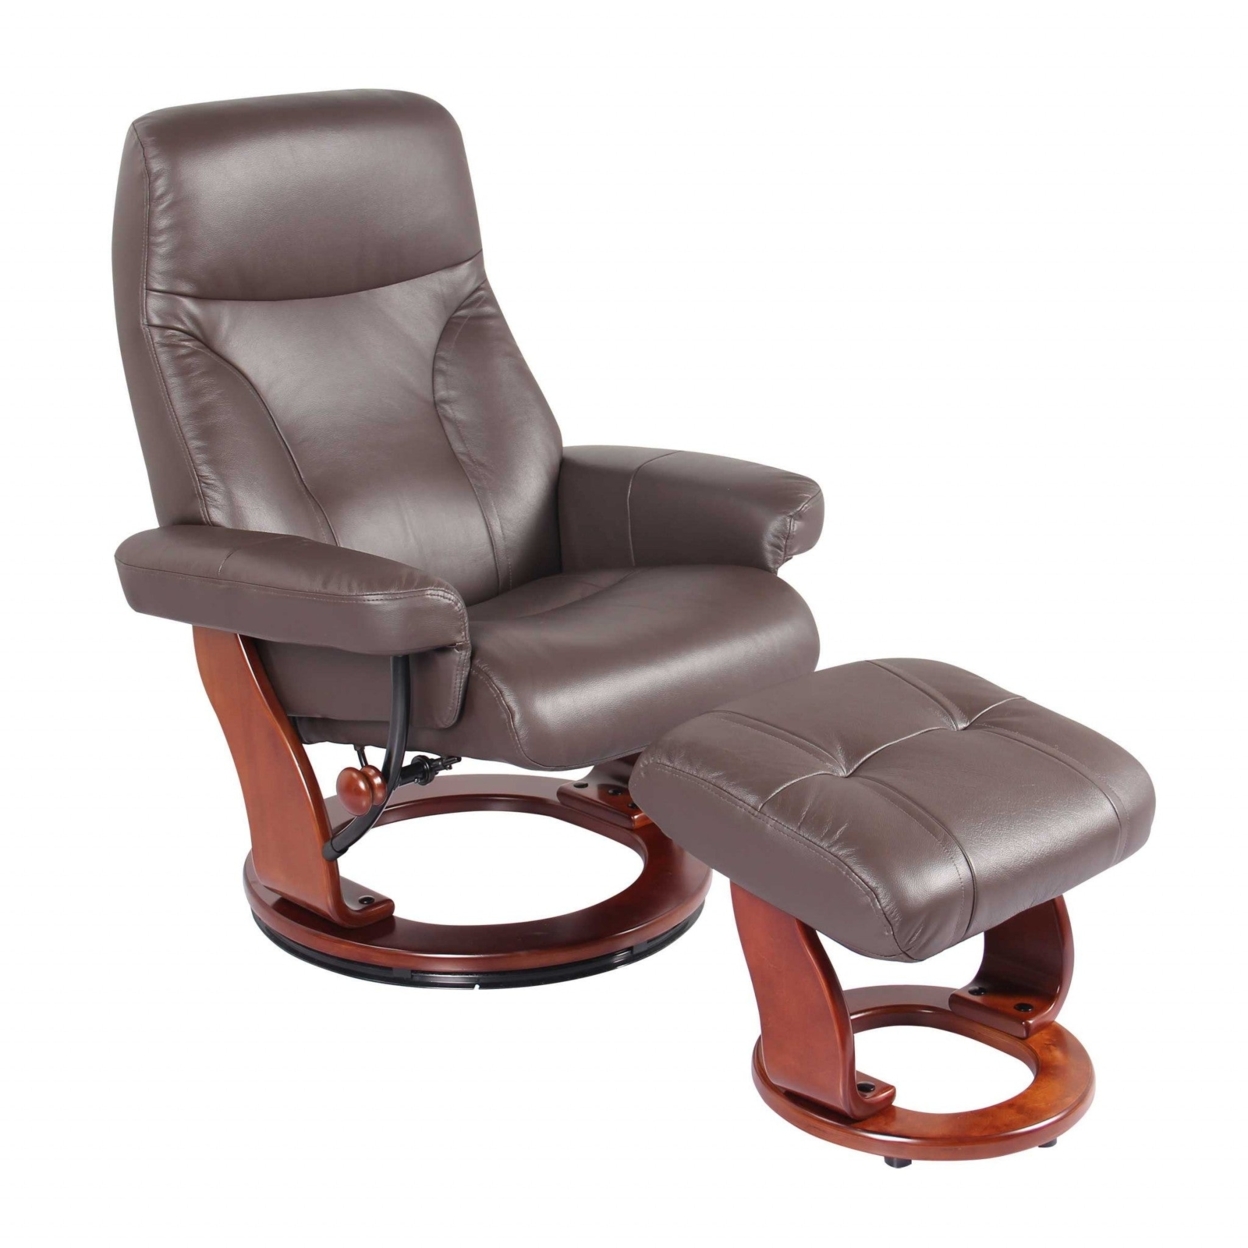 32" x 32" x 40" Kona Brown Cover- Leather & Vinyl match Chair & Ottoman